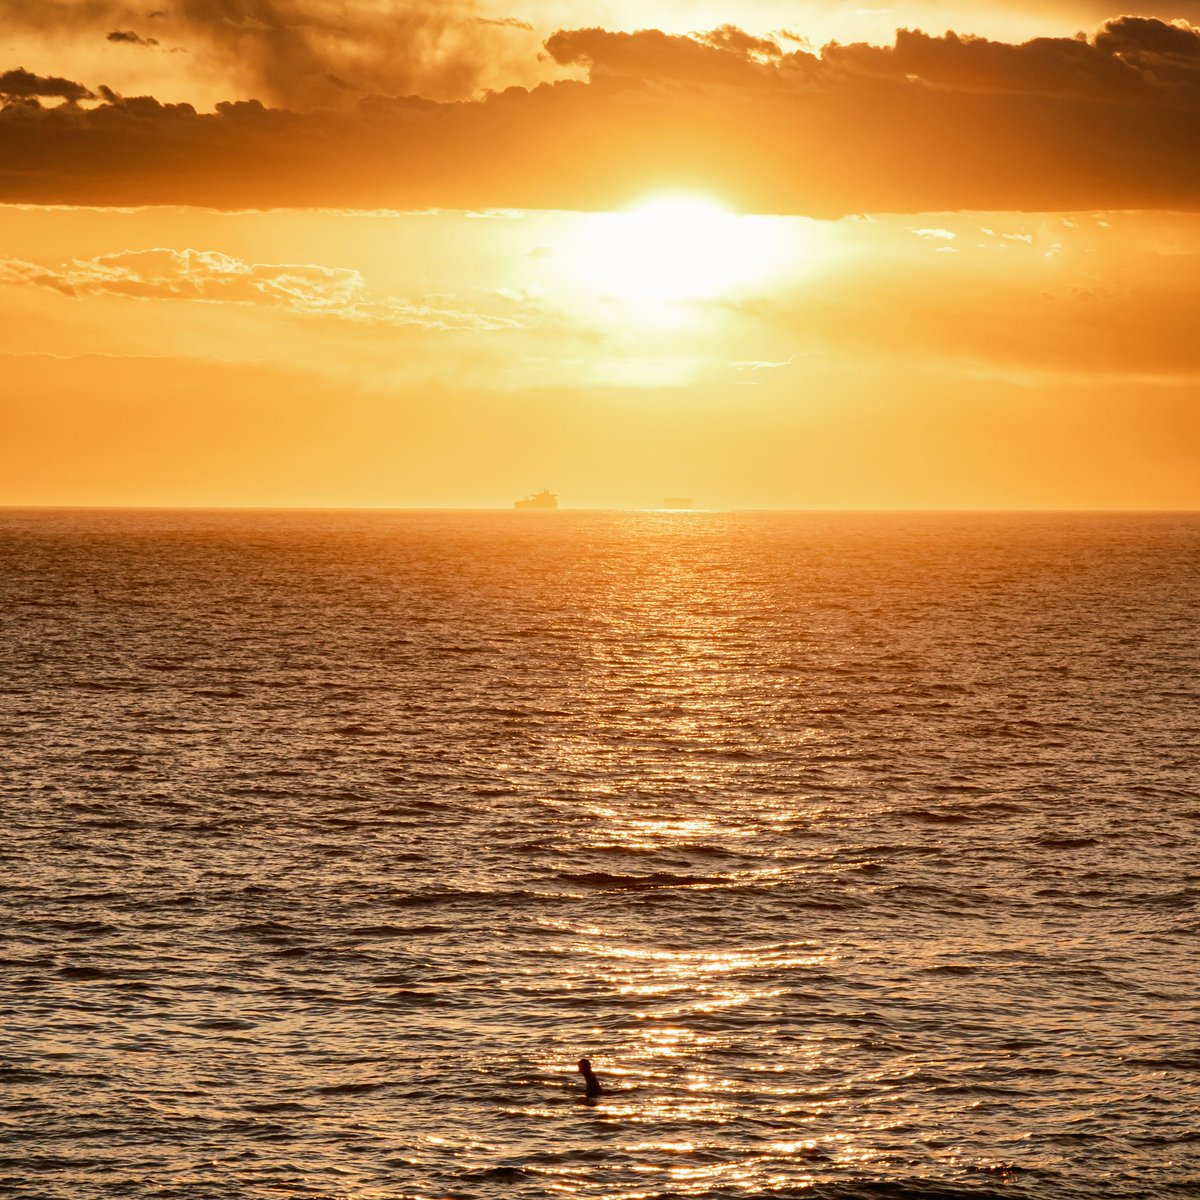 Sunset Surfer

#photo #photographer #photography #landscapephotography #nature #naturephotography #travelphotography #picoftheday #photooftheday #sunset #sunsetphotography #ocean #surfphotography